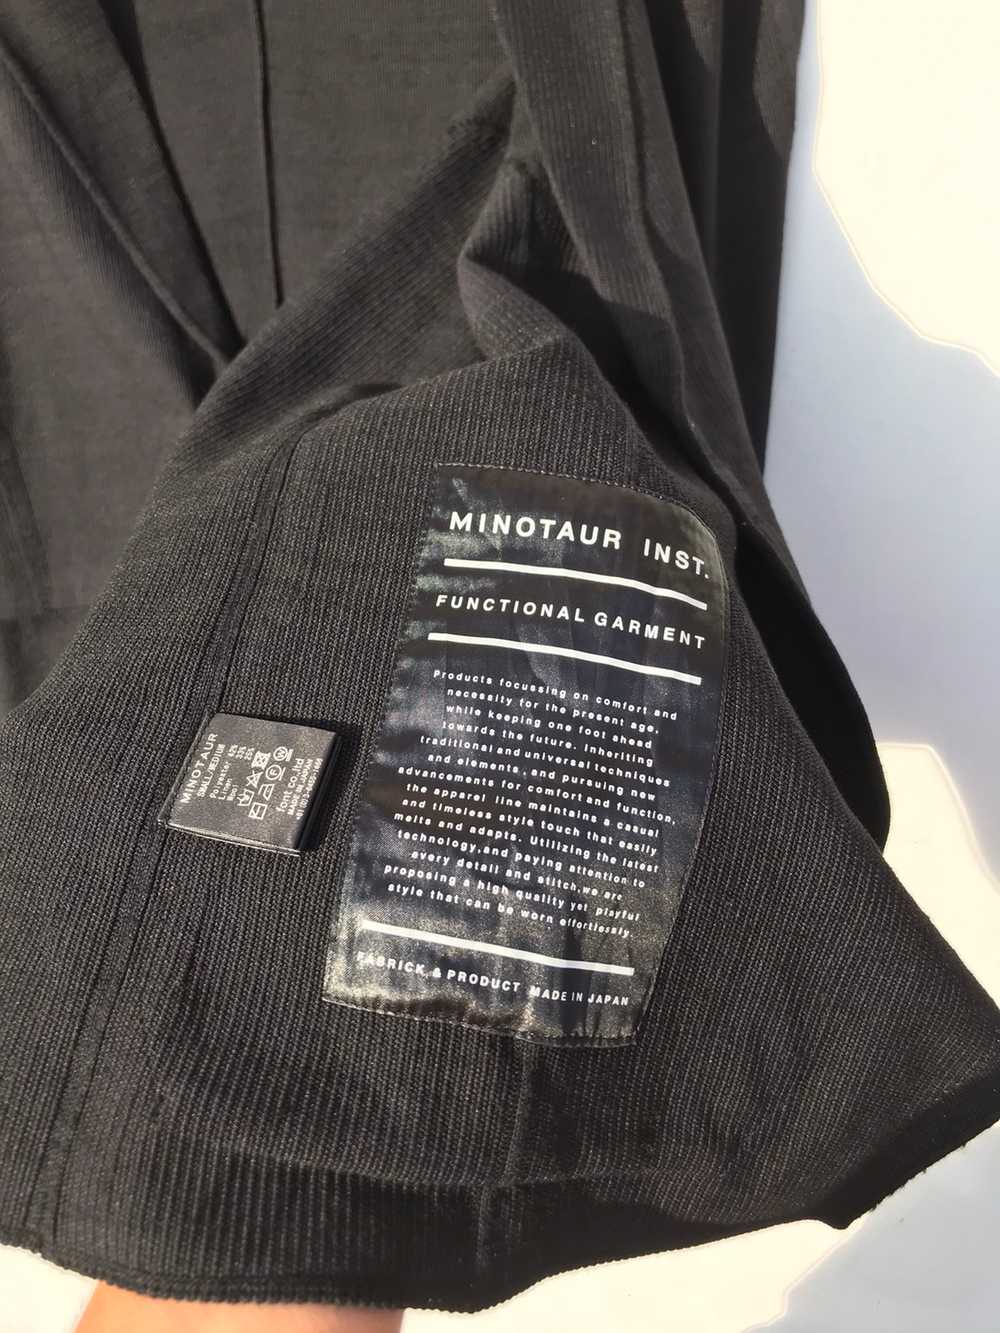 Minotaur - Minotaur Inc Rare Design Jacket - image 4